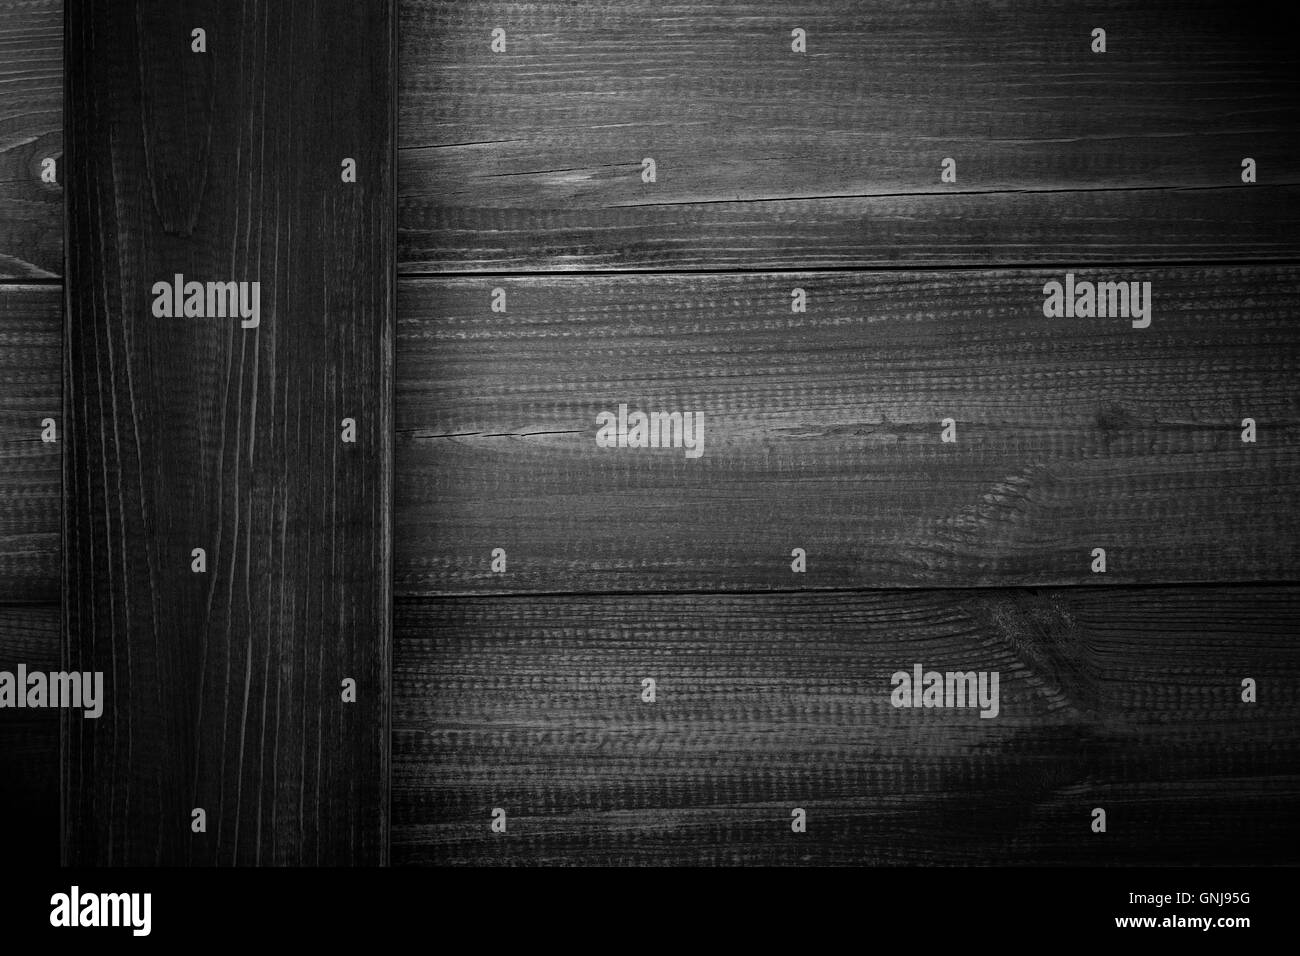 black wooden background or wooden texture desktop Stock Photo